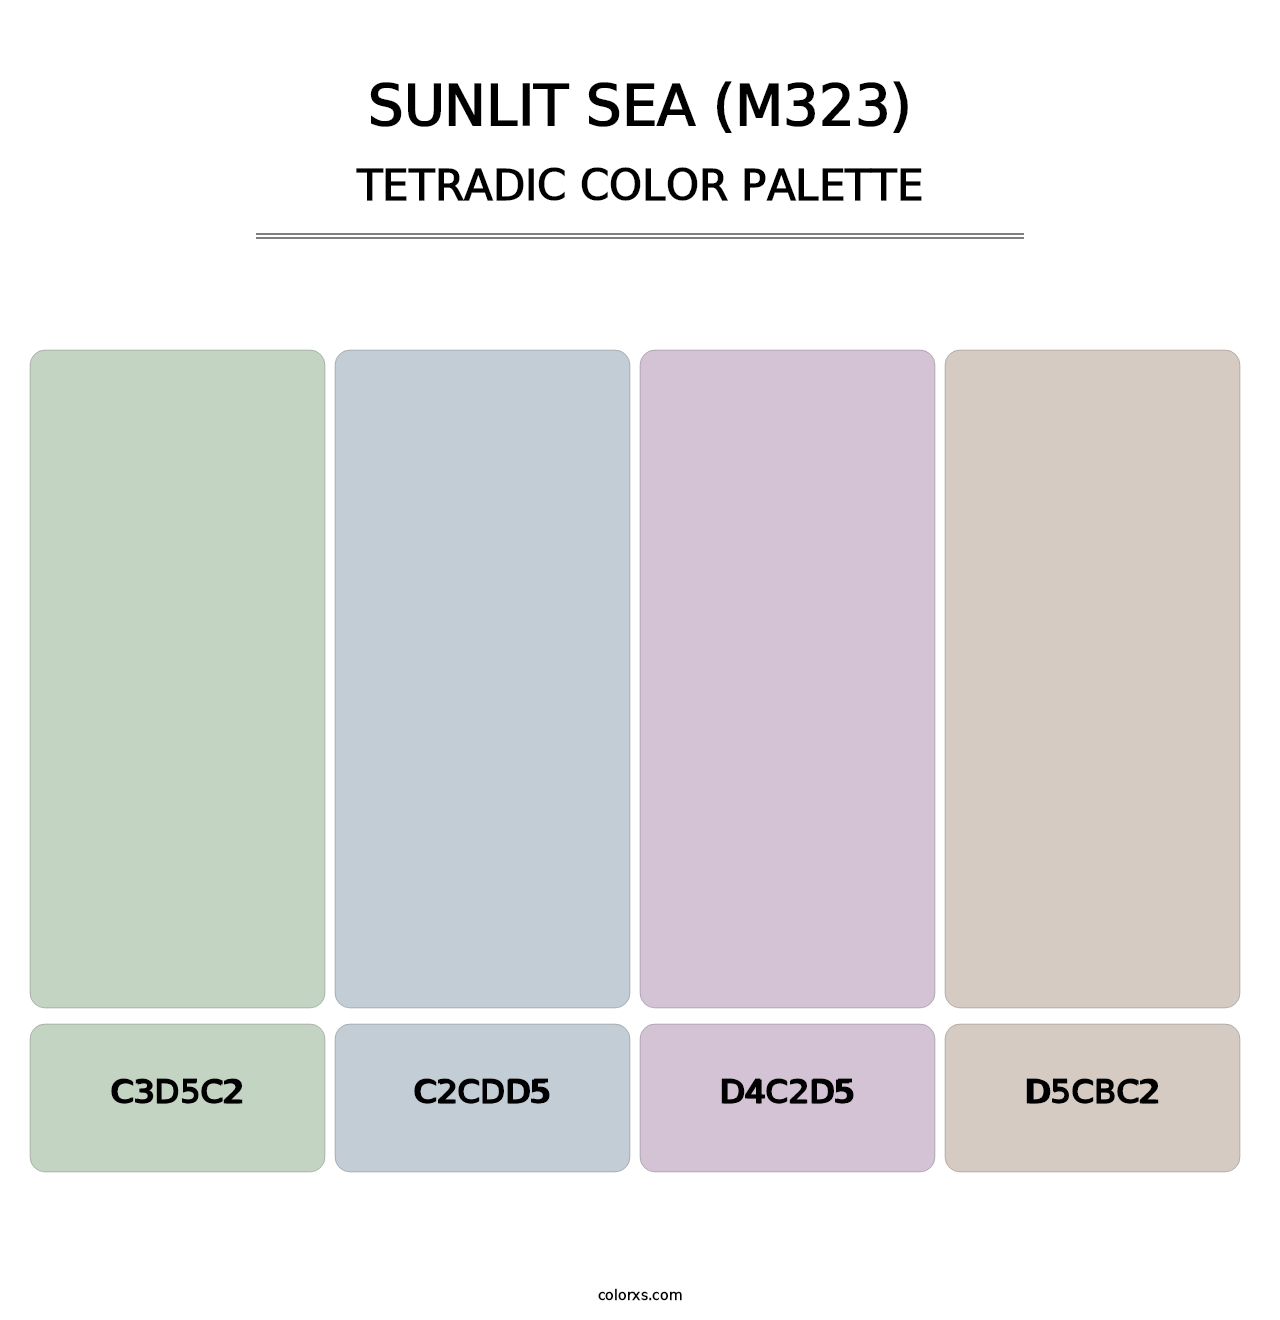 Sunlit Sea (M323) - Tetradic Color Palette